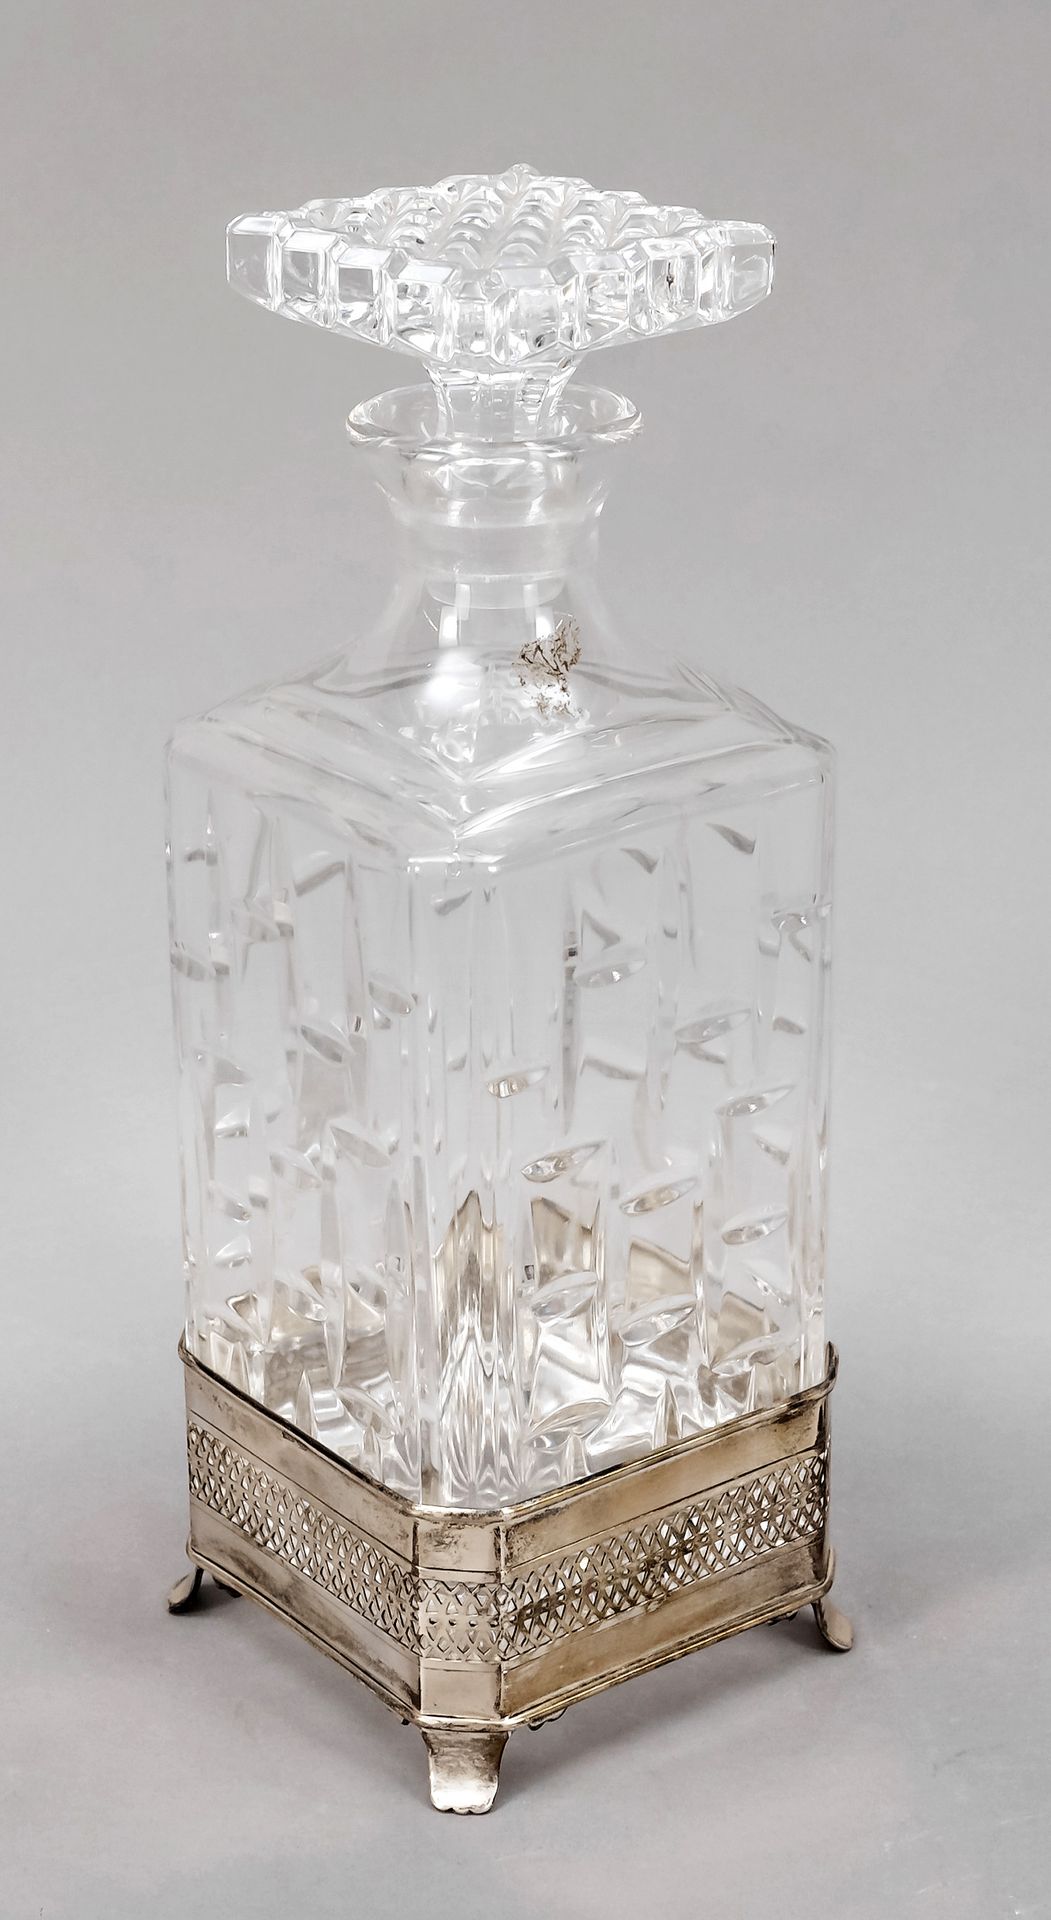 Null 带银质支架的玻璃杯，意大利，20世纪，银质800/000，带画廊边缘的4个脚，棱角分明的杯身有切割装饰，高25厘米